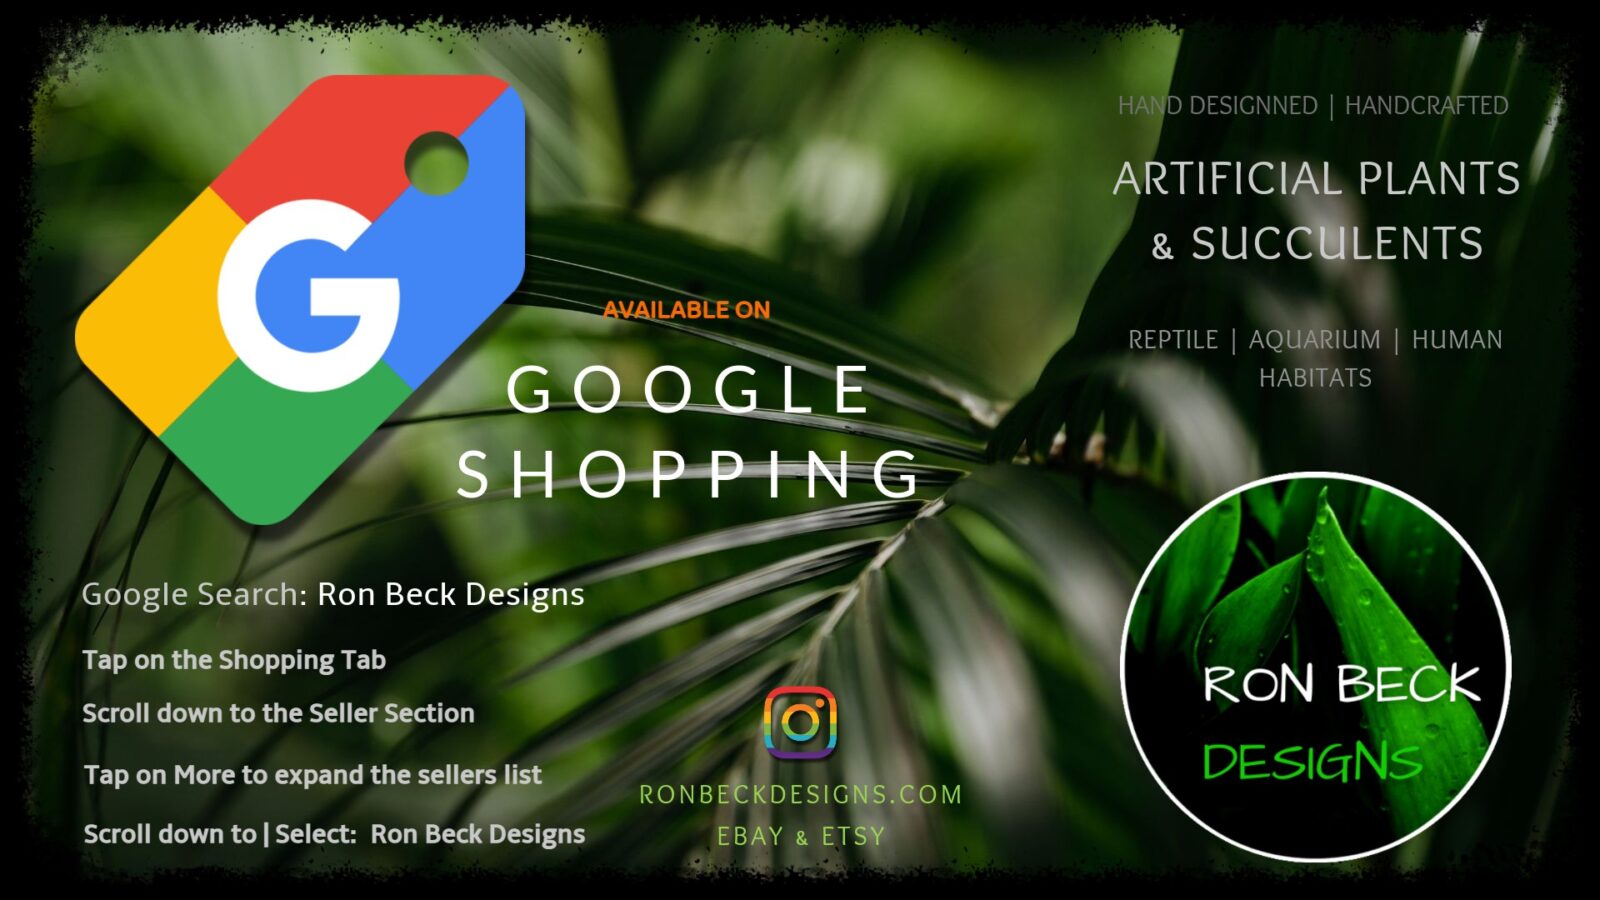 Google Shopping - Ron Beck Designs - Artificial Plants 1920 1080